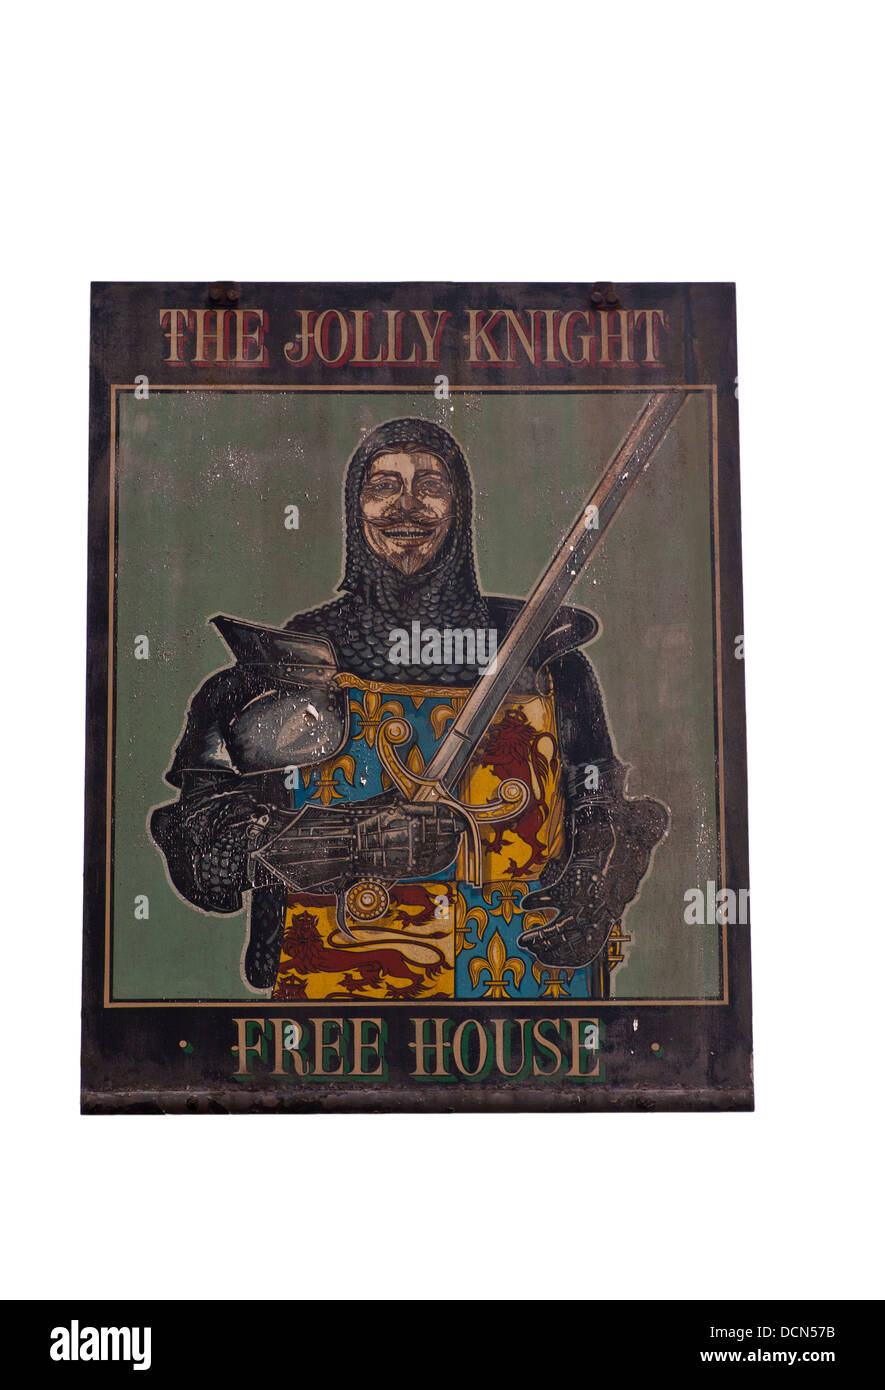 The Jolly Knight Free House Pub Sign UK Stock Photo